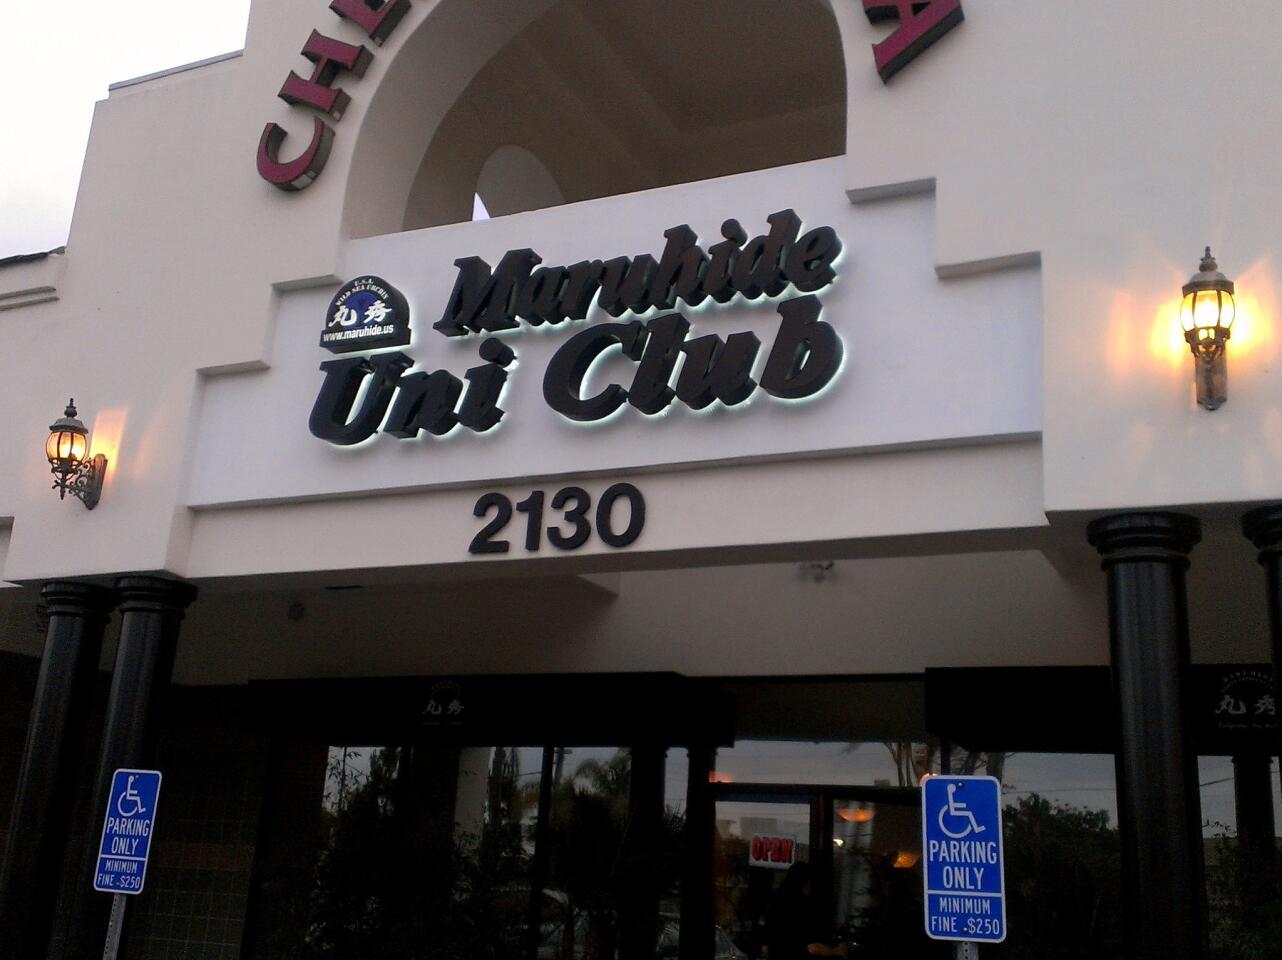 Maruhide Uni Club